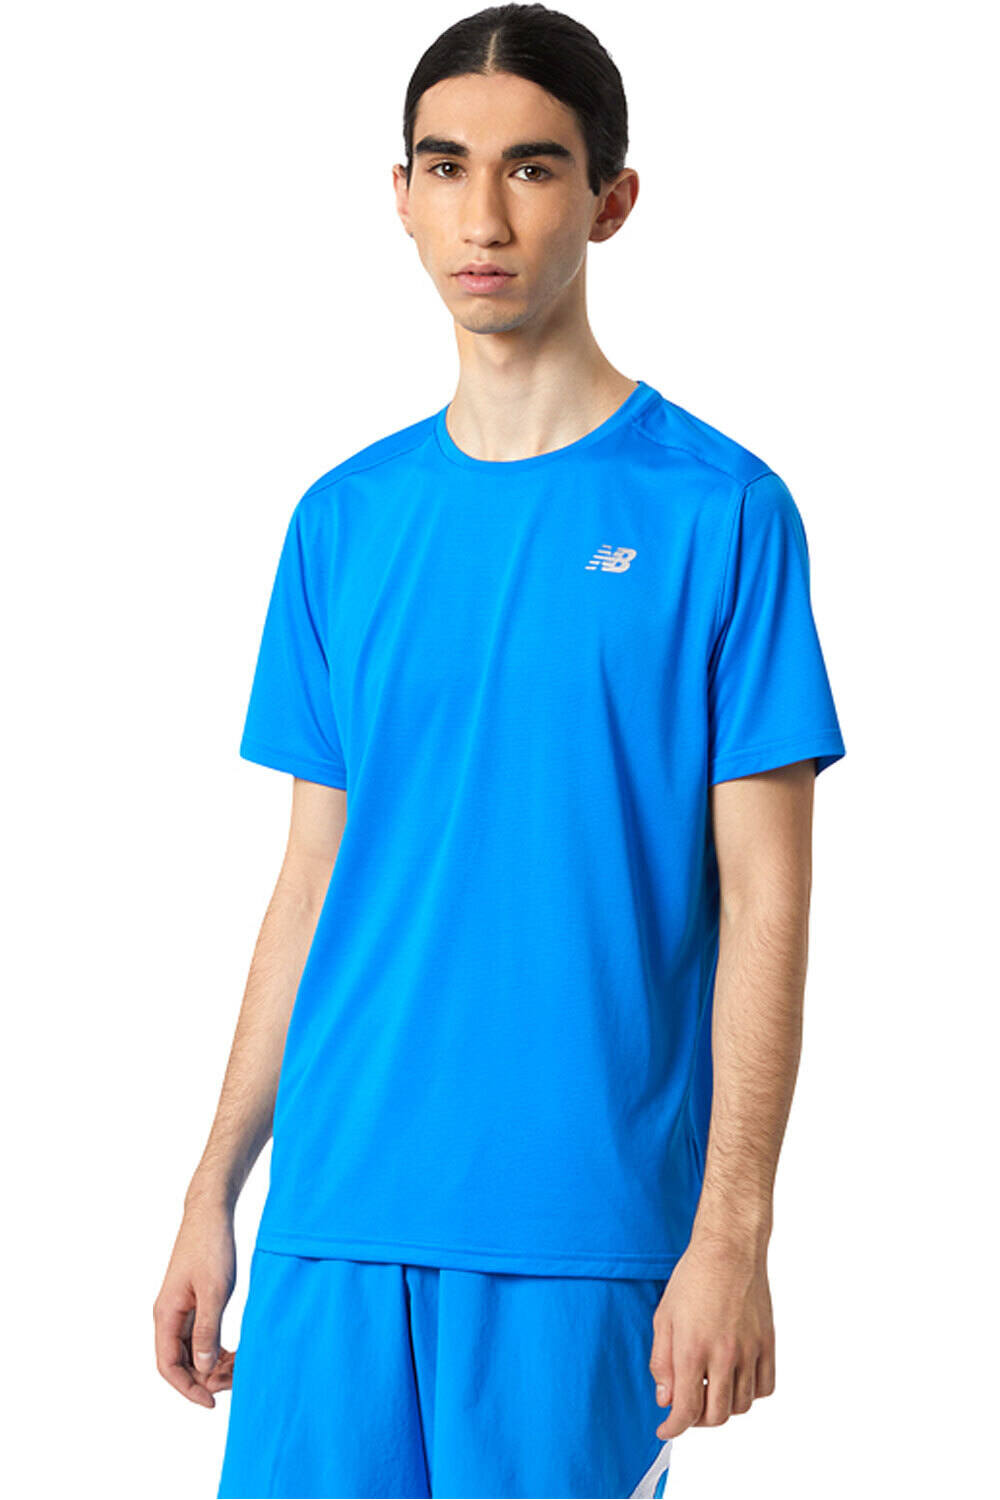 New Balance camiseta técnica manga corta hombre Accelerate Short Sleeve vista frontal